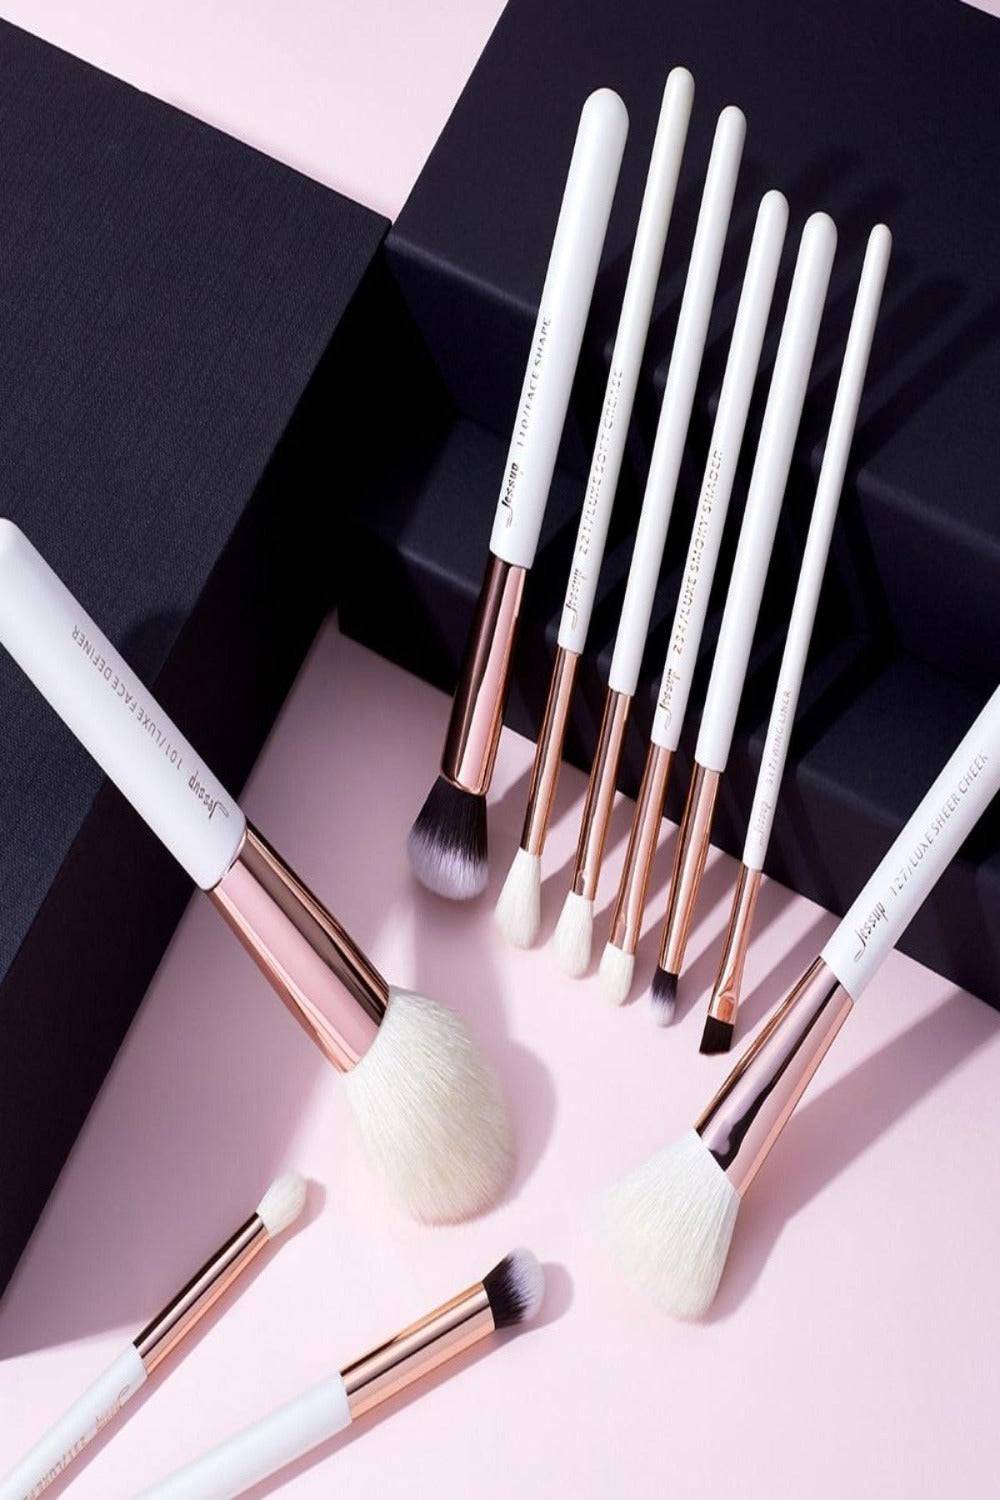 10 Piece White & Chrome Silver Makeup Brush Set – beautypopcosmetics